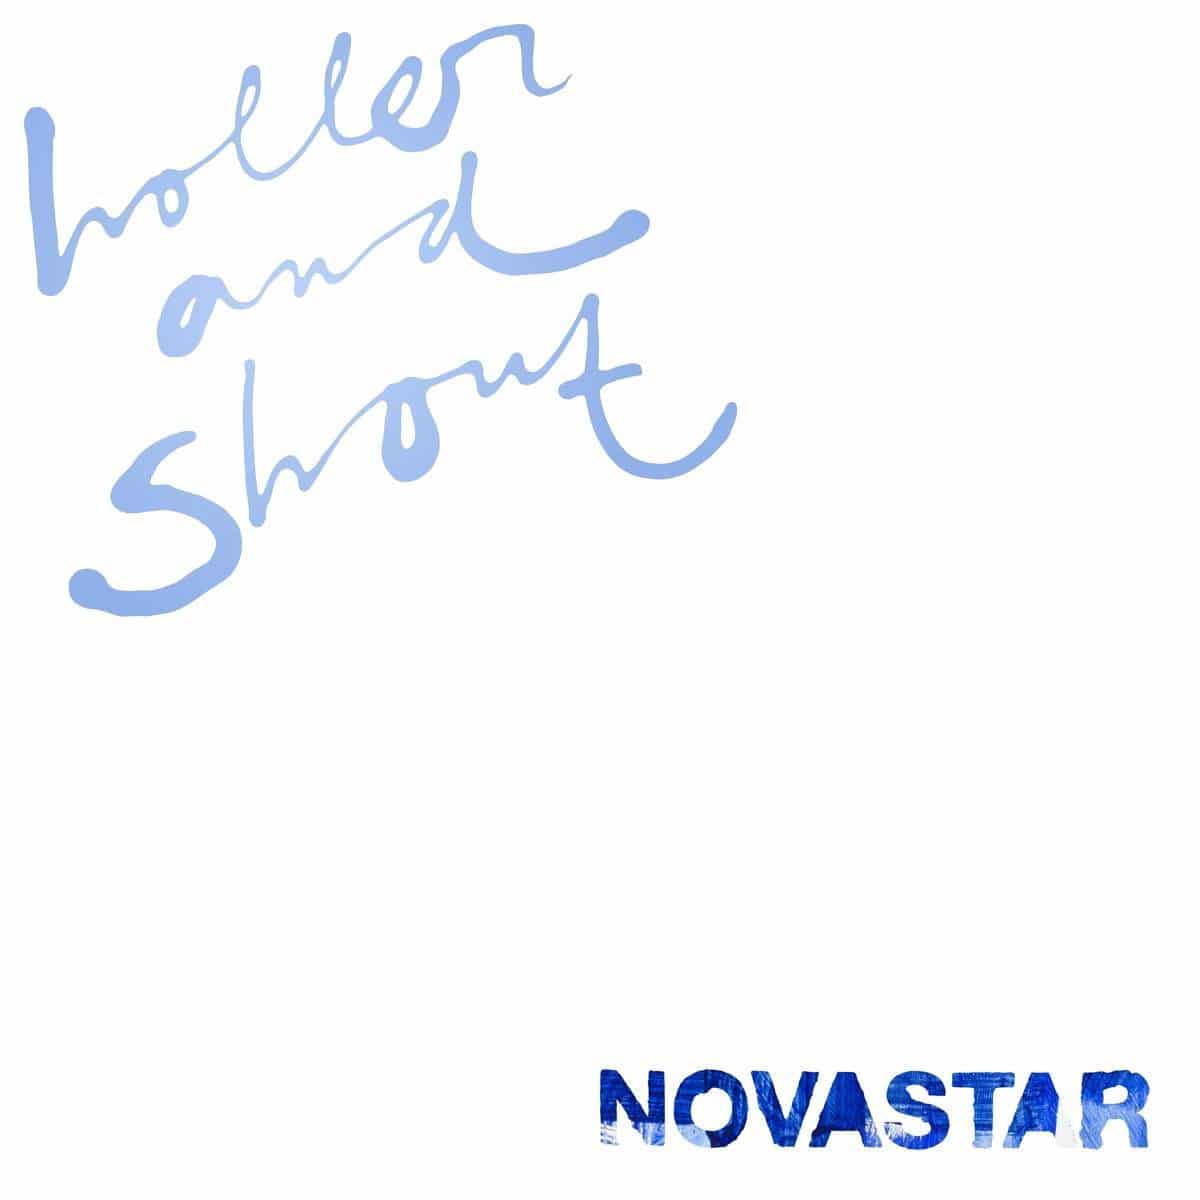 Album hoes van Novastar - Holler and shout